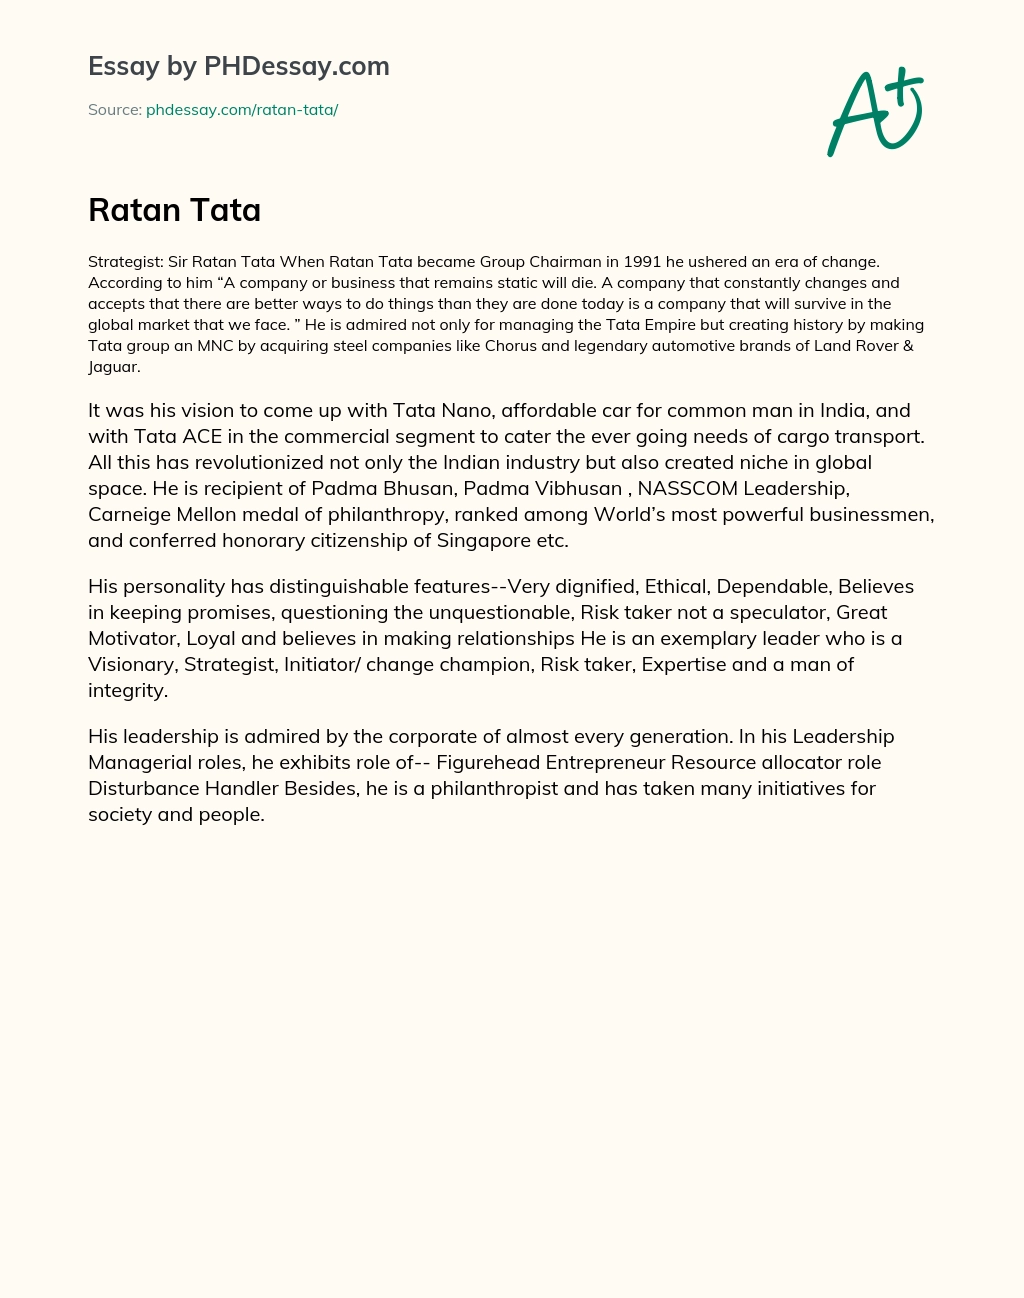 Strategist: Sir Ratan Tata – A Visionary Leader of the Tata Empire essay